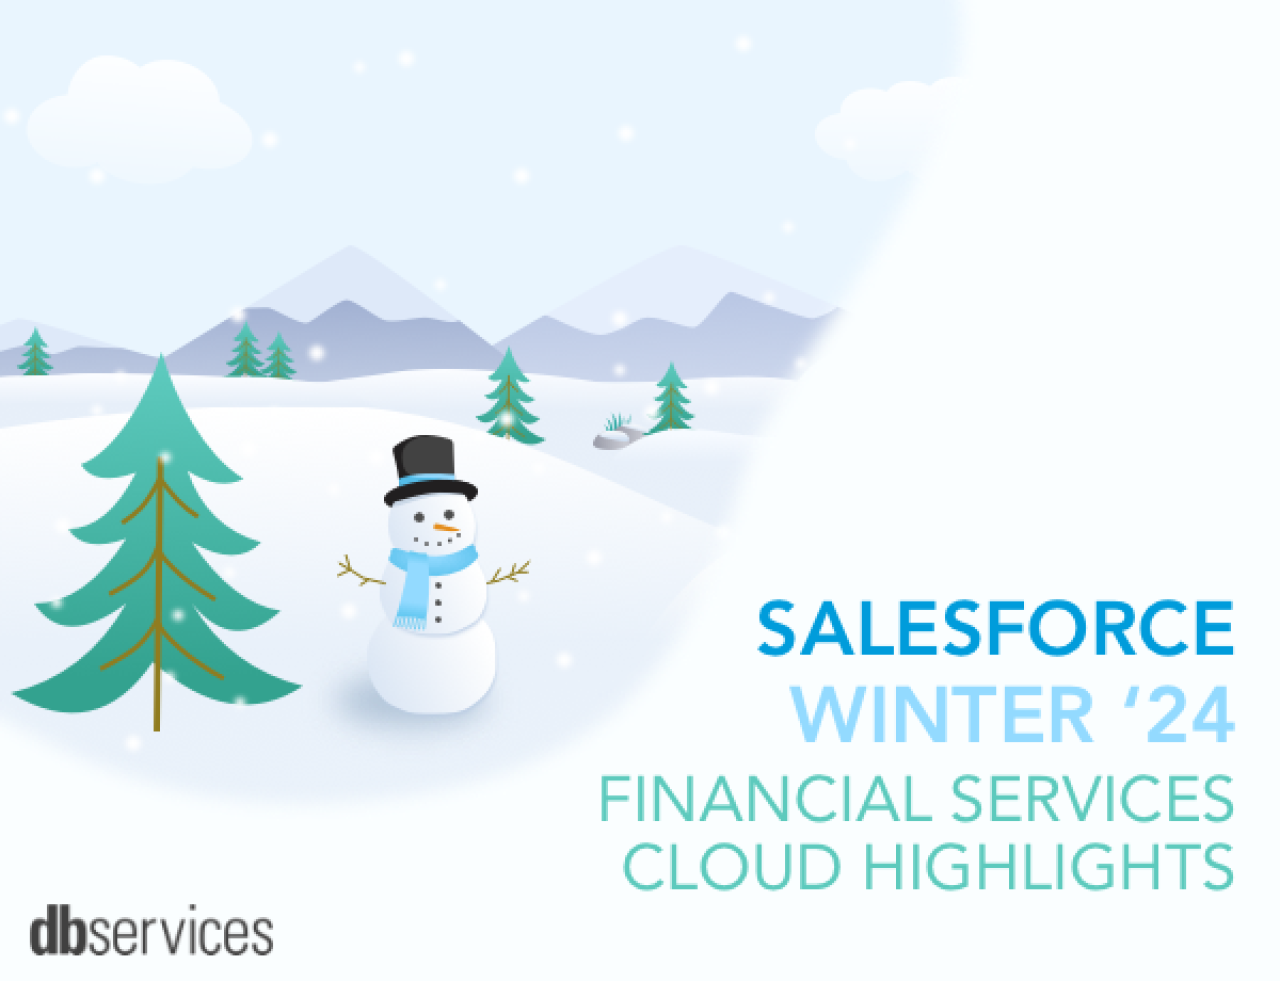 salesforce winter '24 financial services cloud db services.